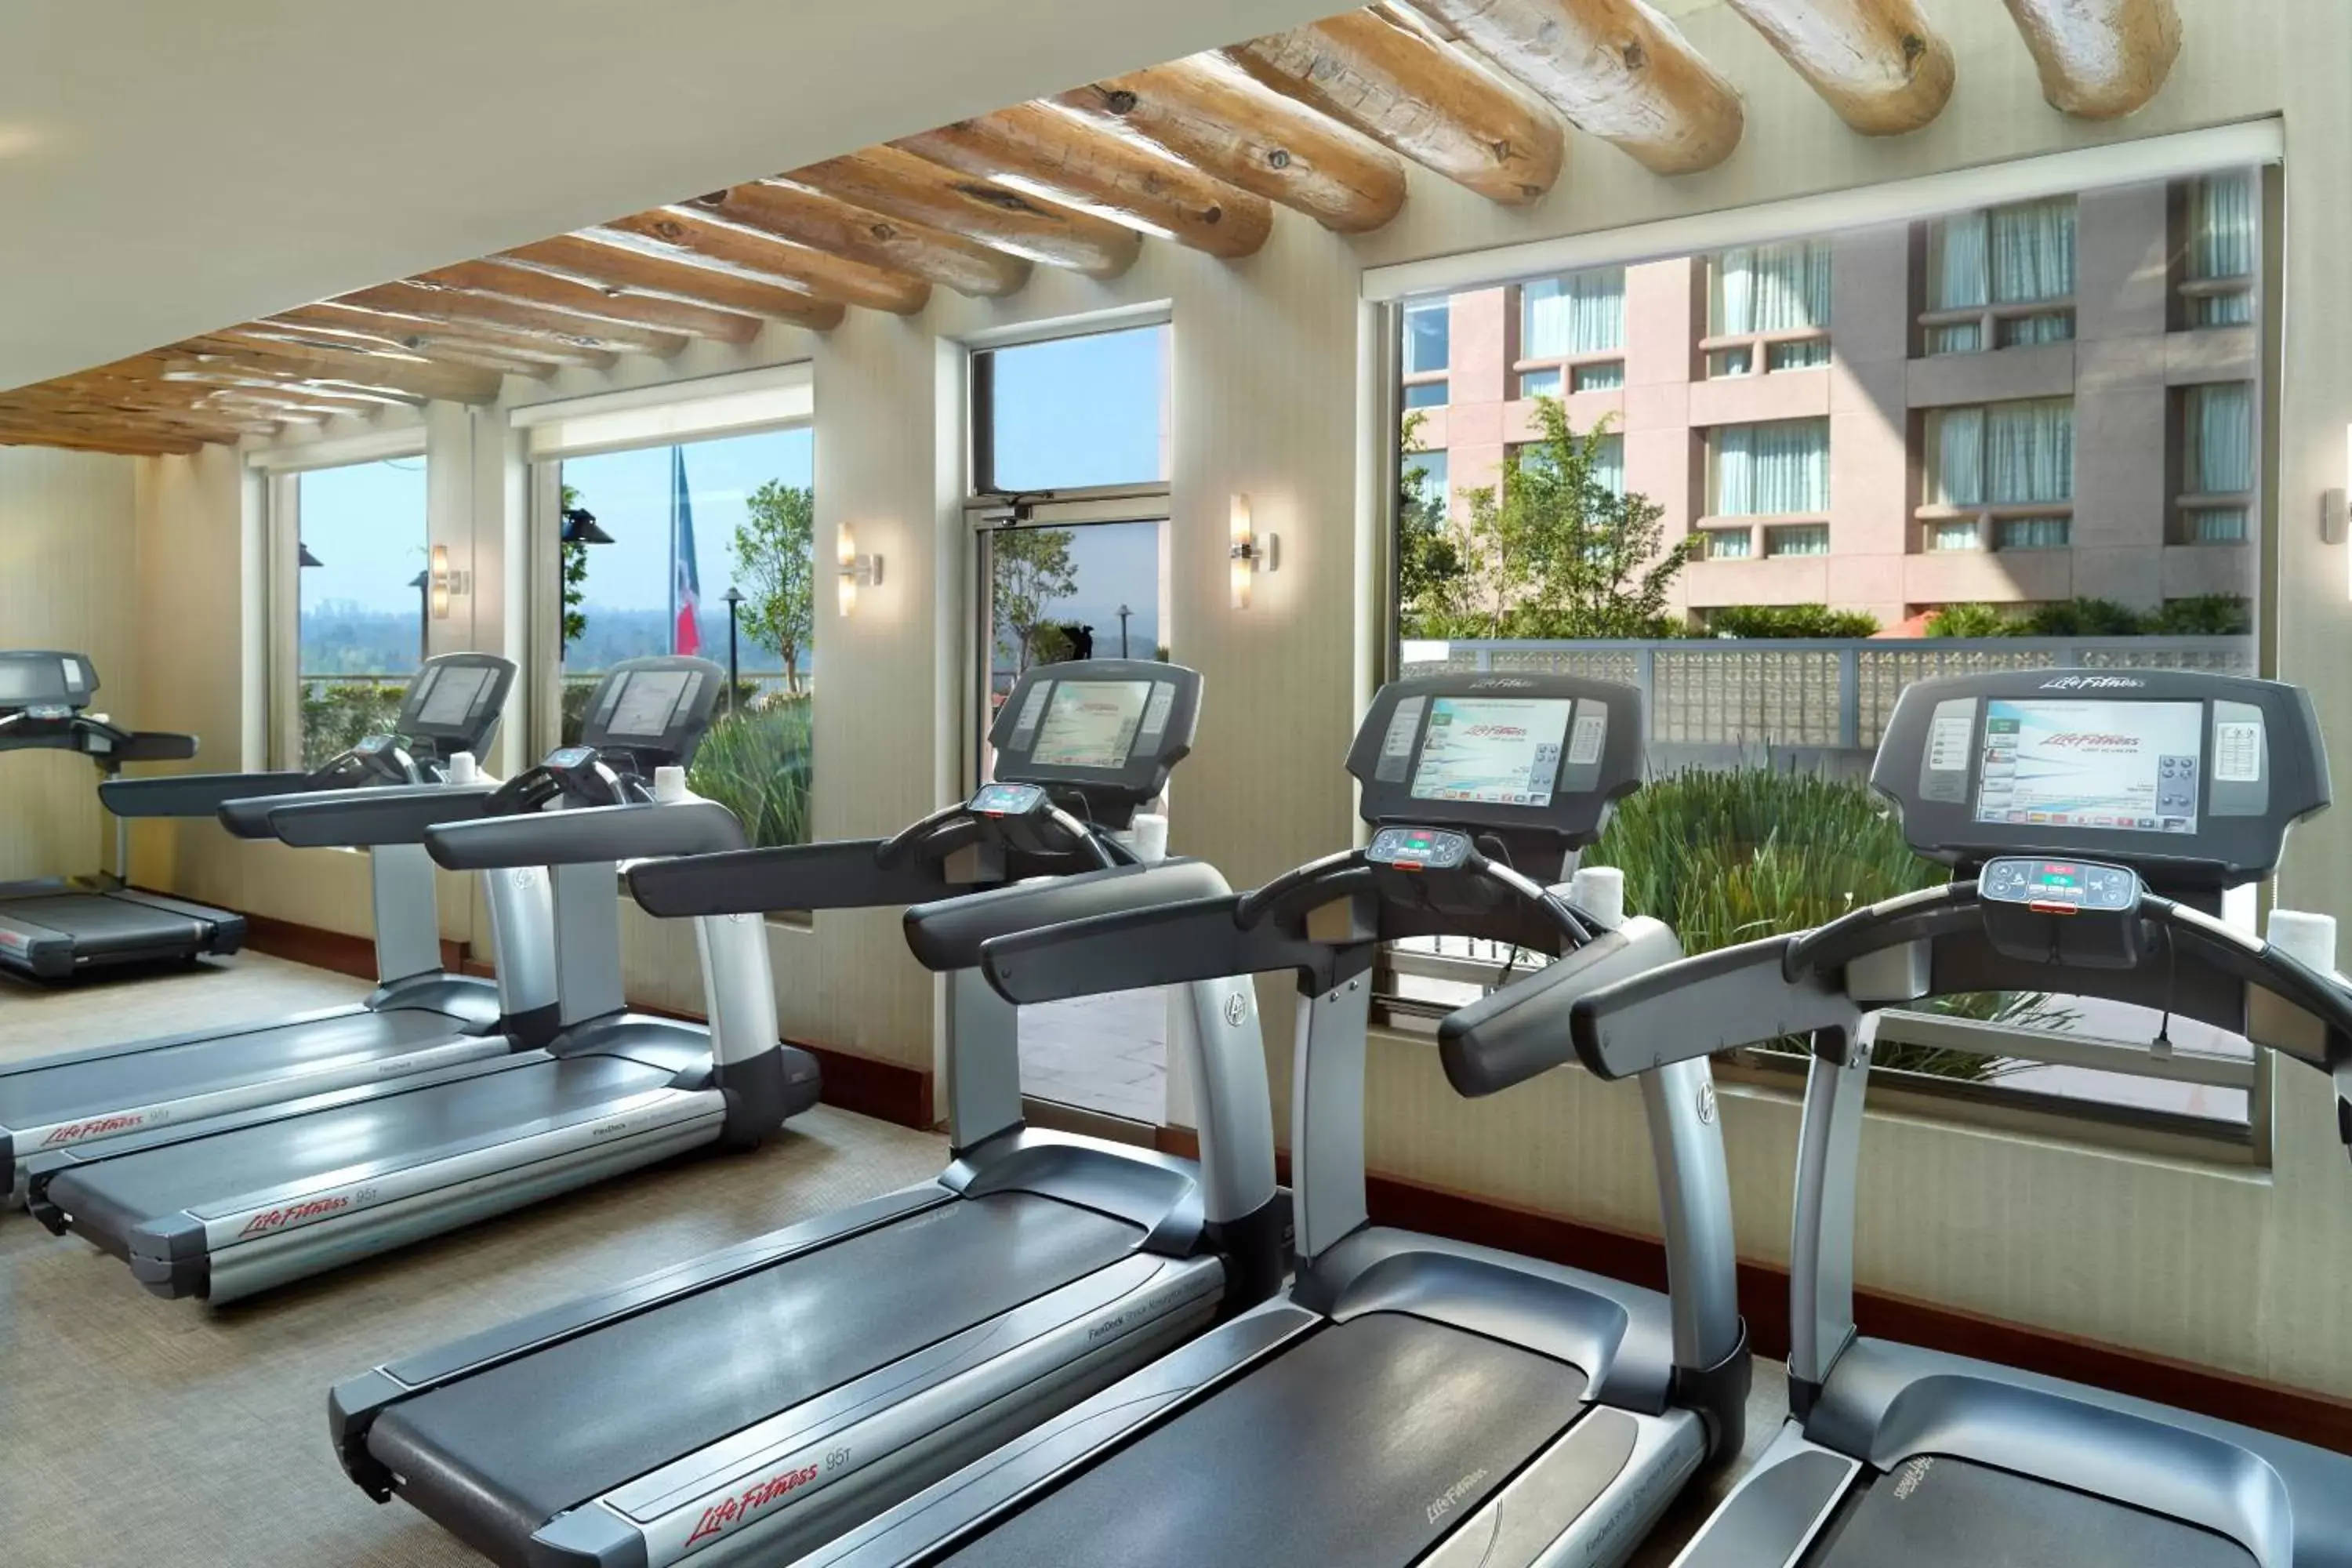 Fitness centre/facilities, Fitness Center/Facilities in JW Marriott Hotel Mexico City Polanco